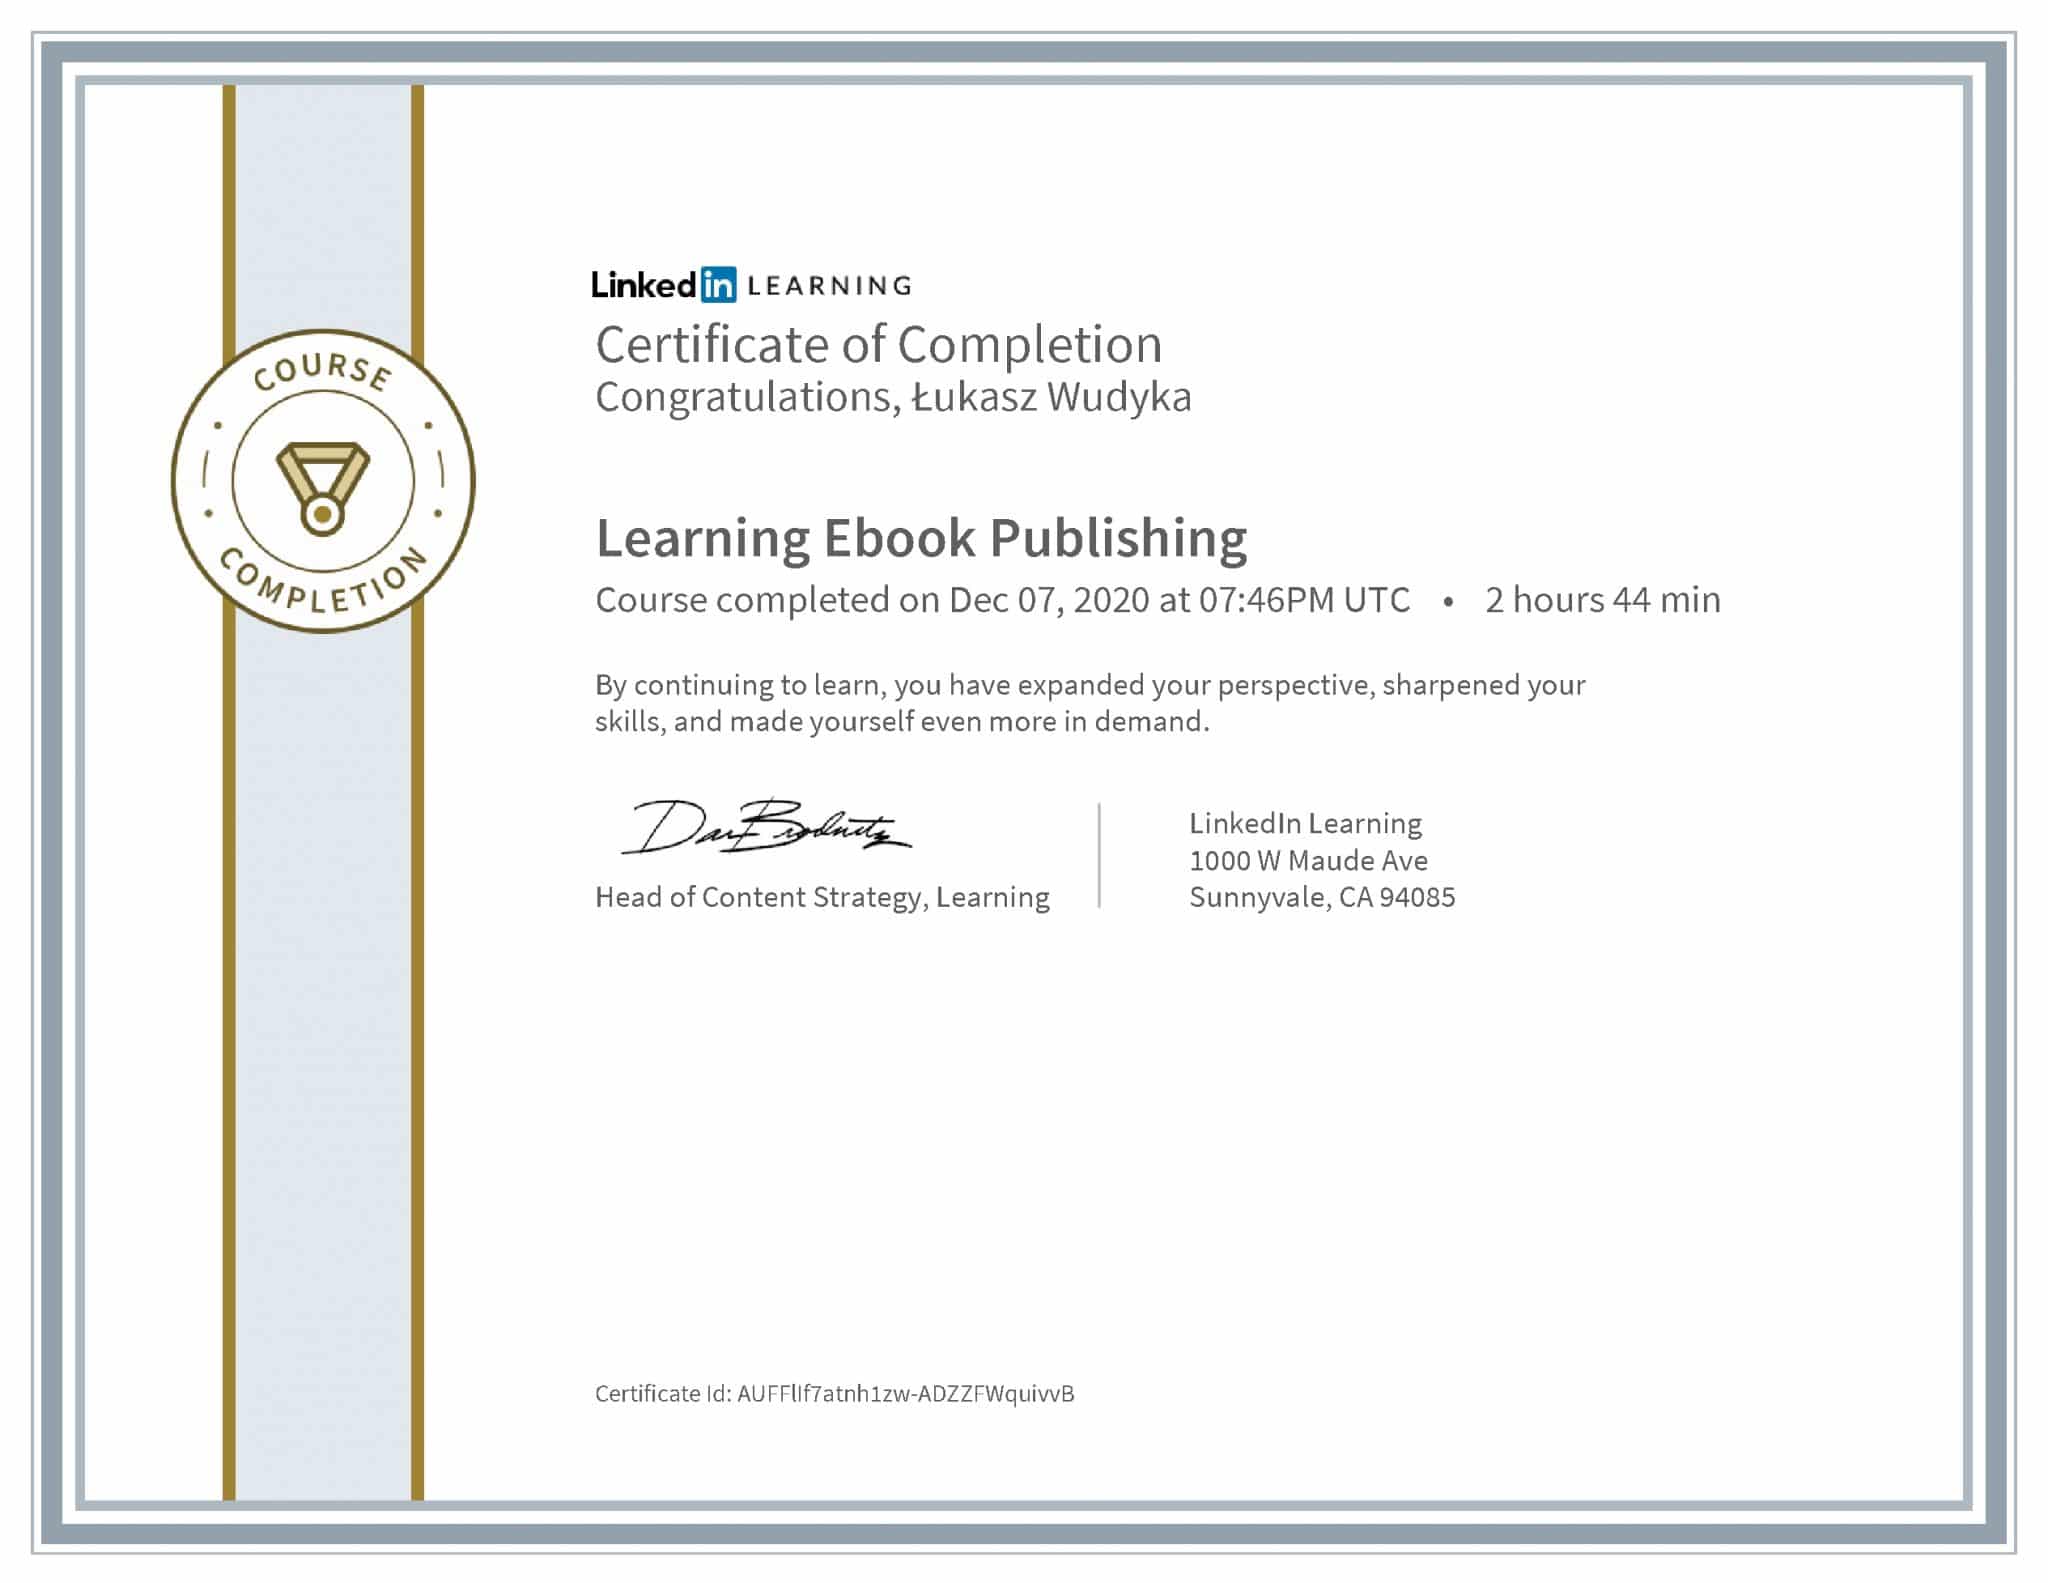 Łukasz Wudyka certyfikat LinkedIn Learning Ebook Publishing